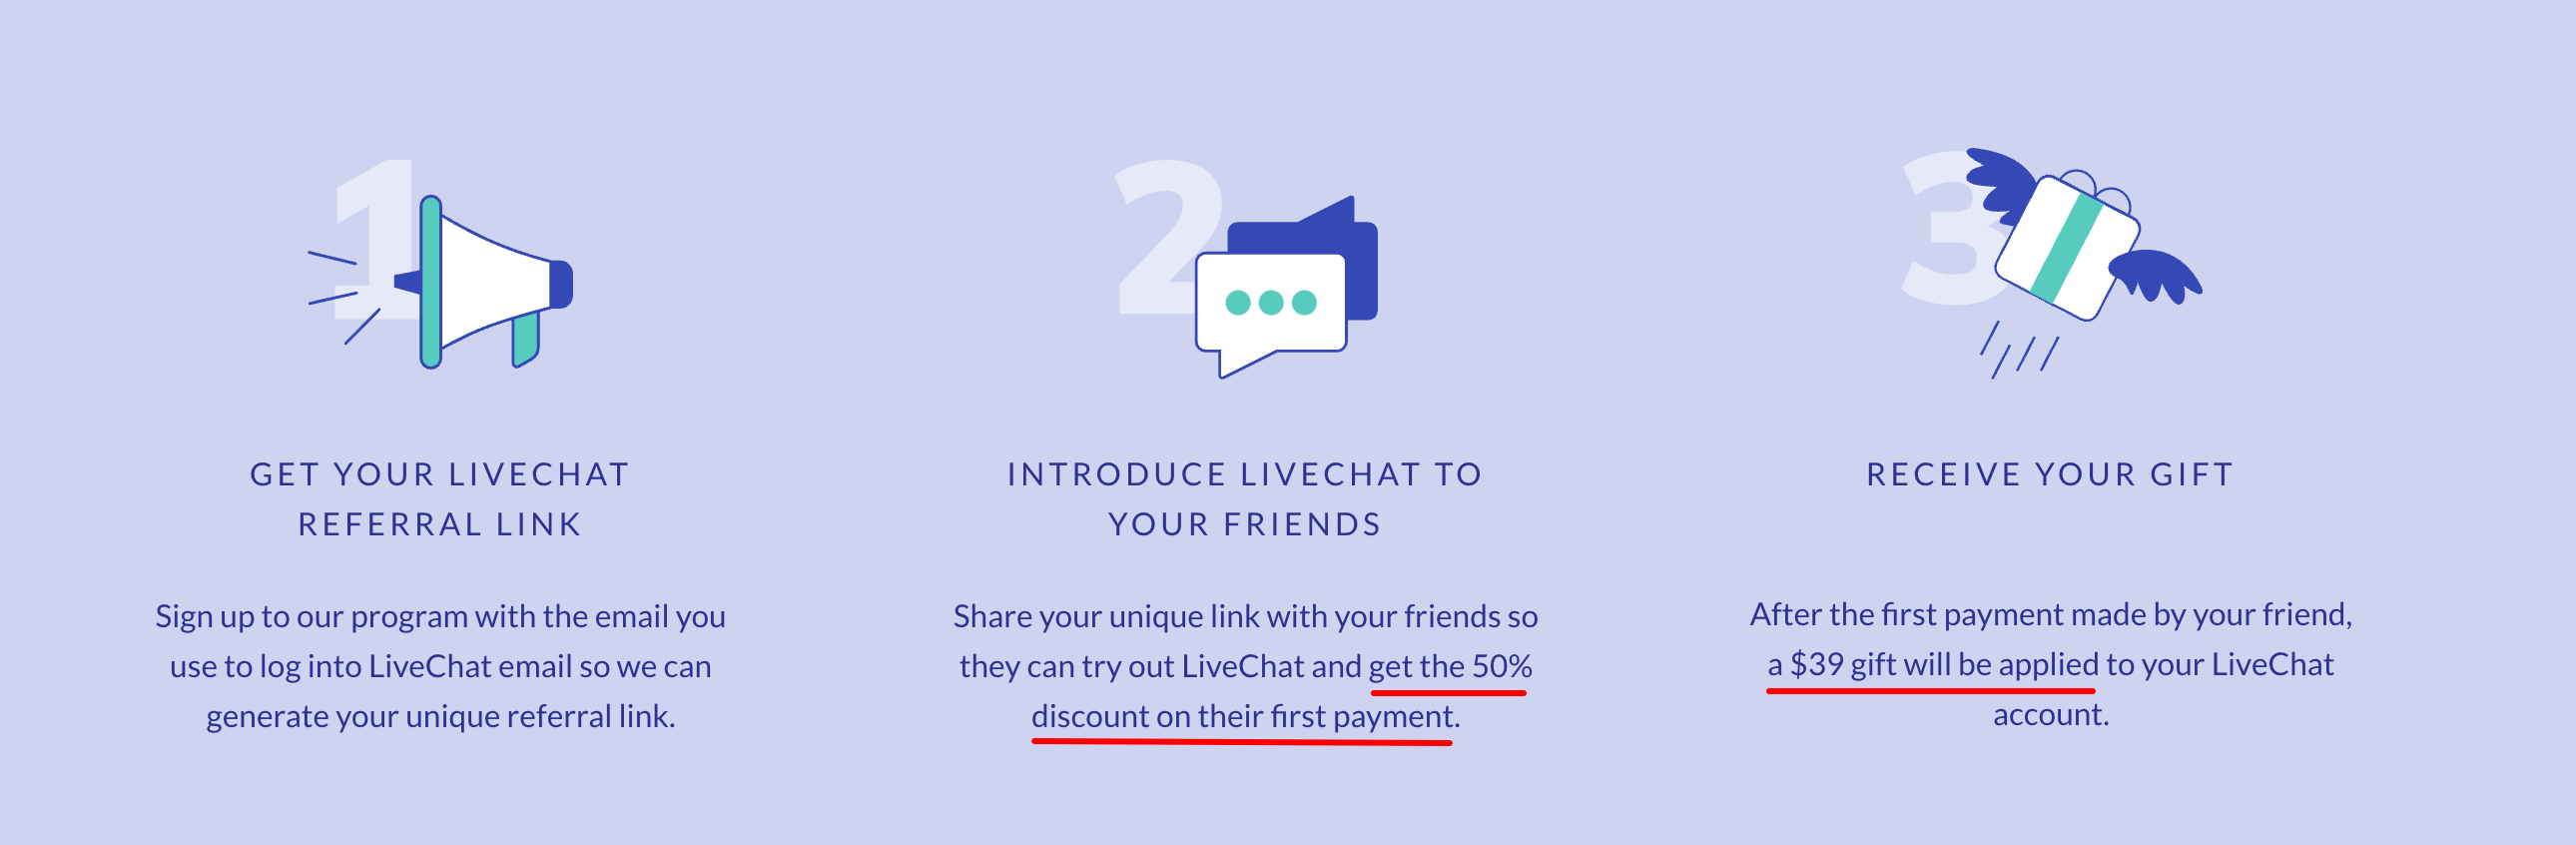 LiveChat referral program instructions